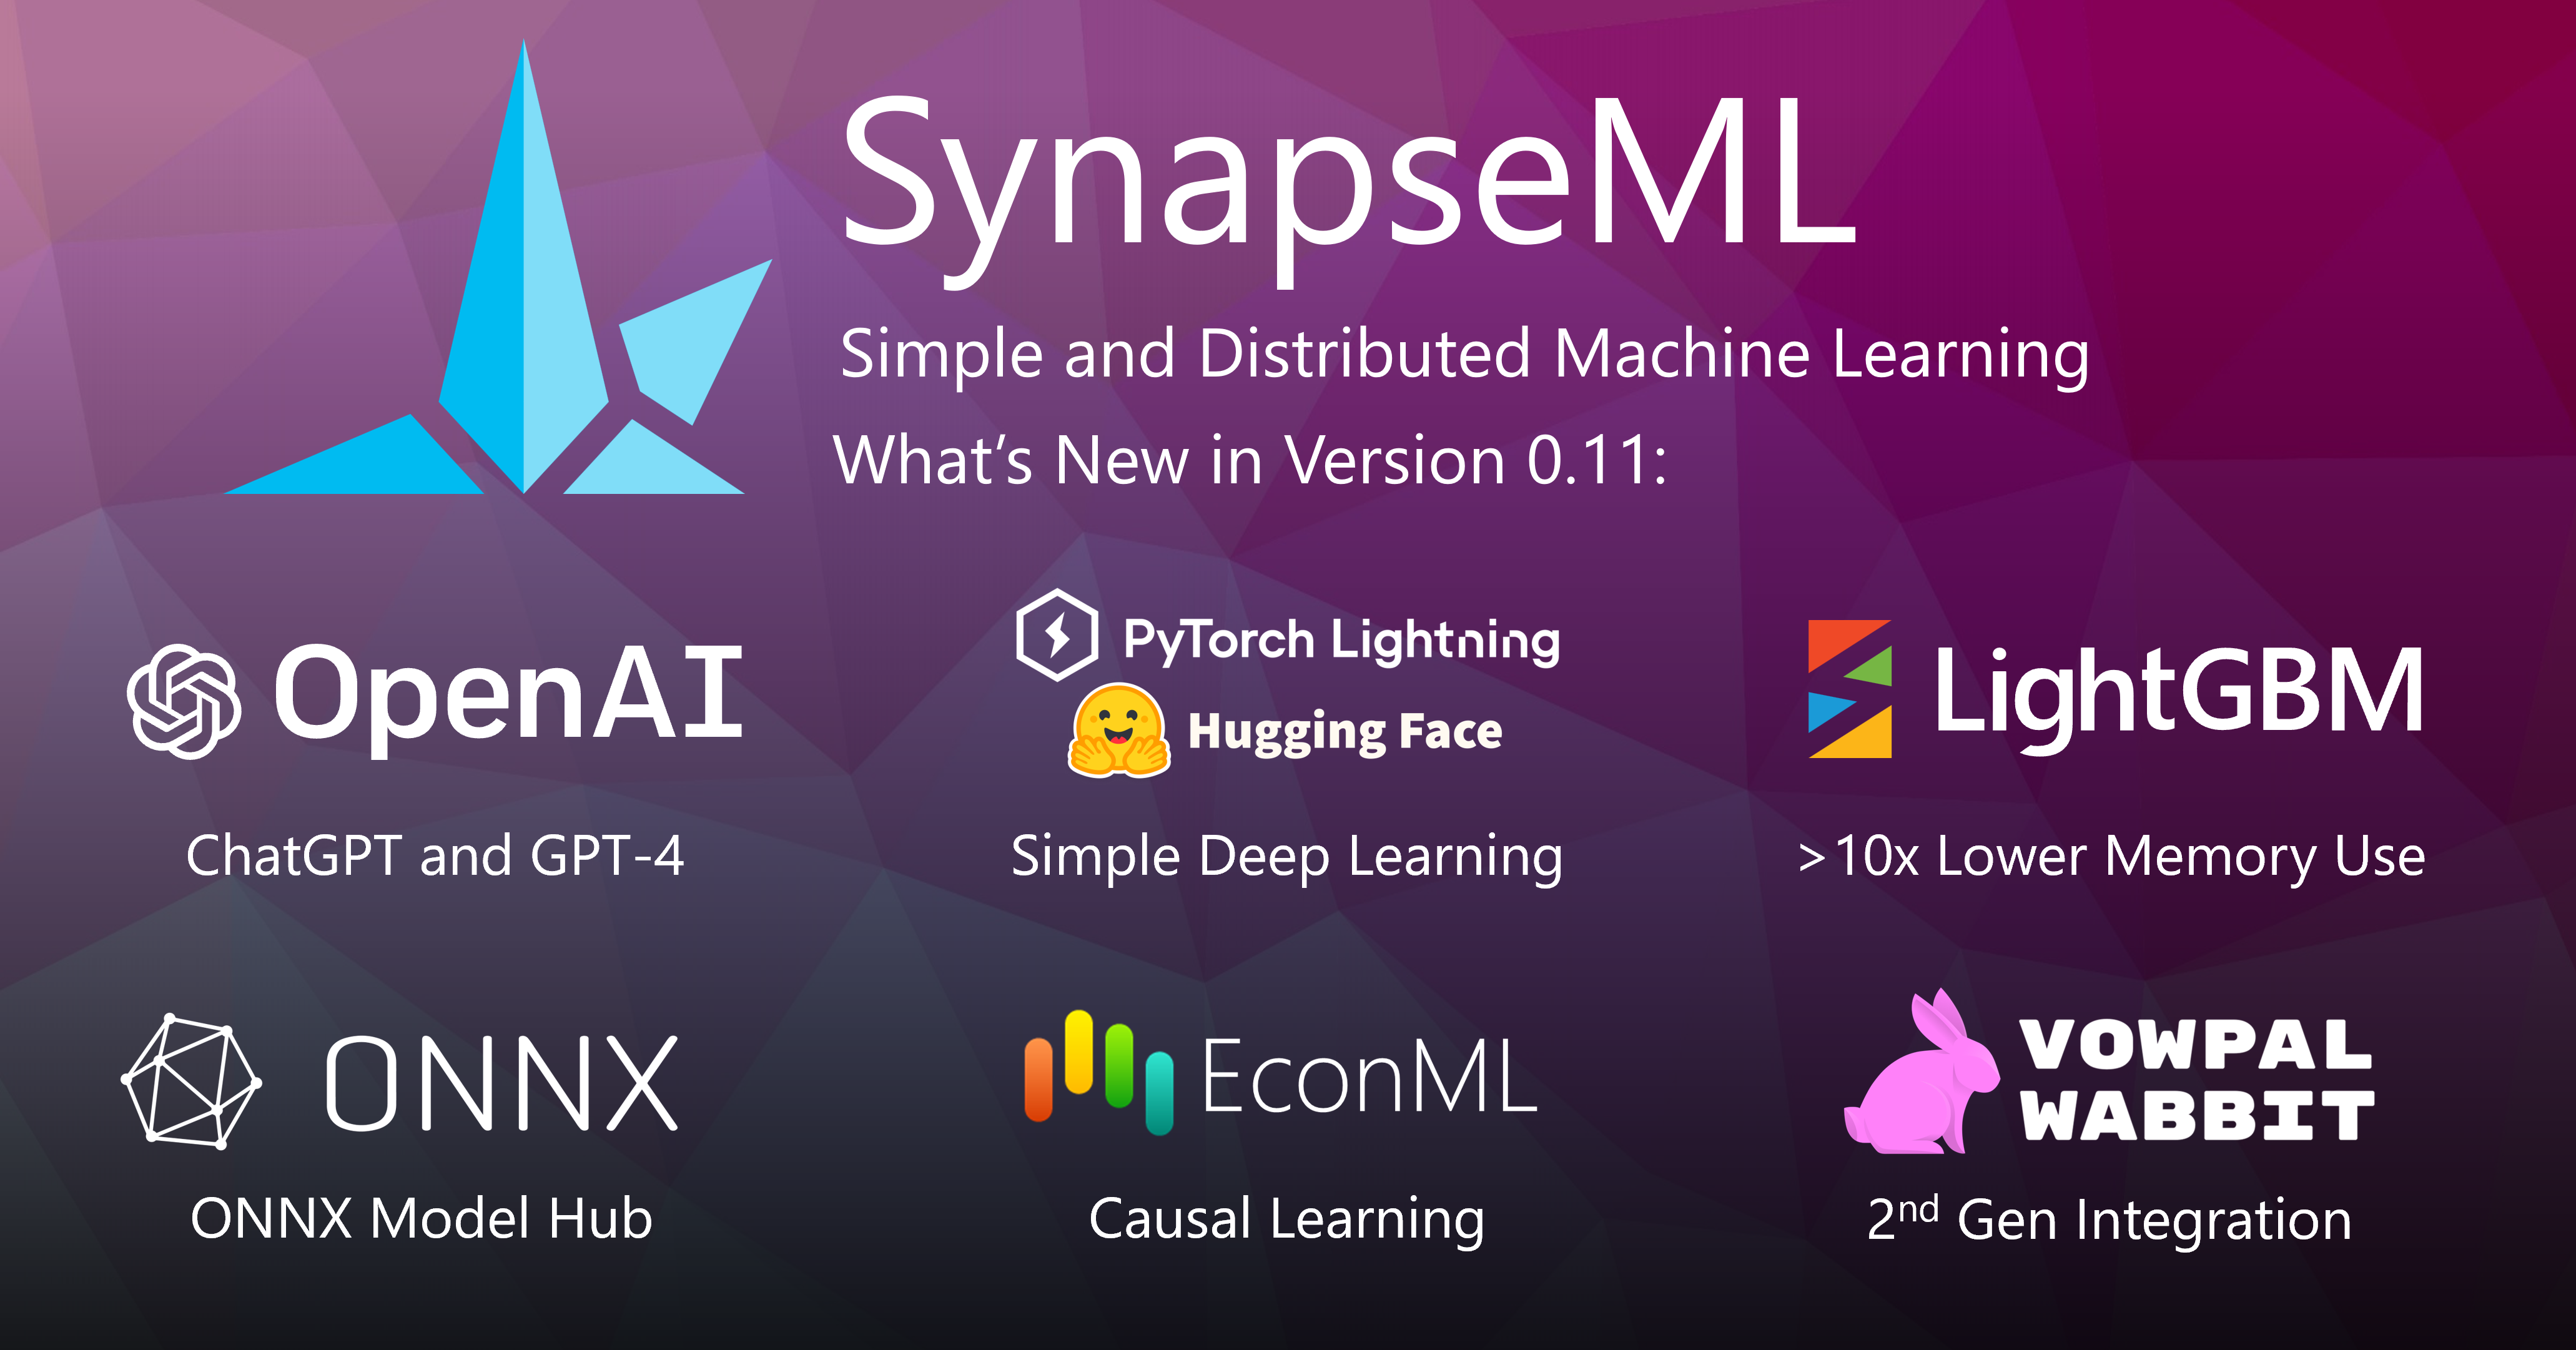 What’s new in SynapseML v0.11